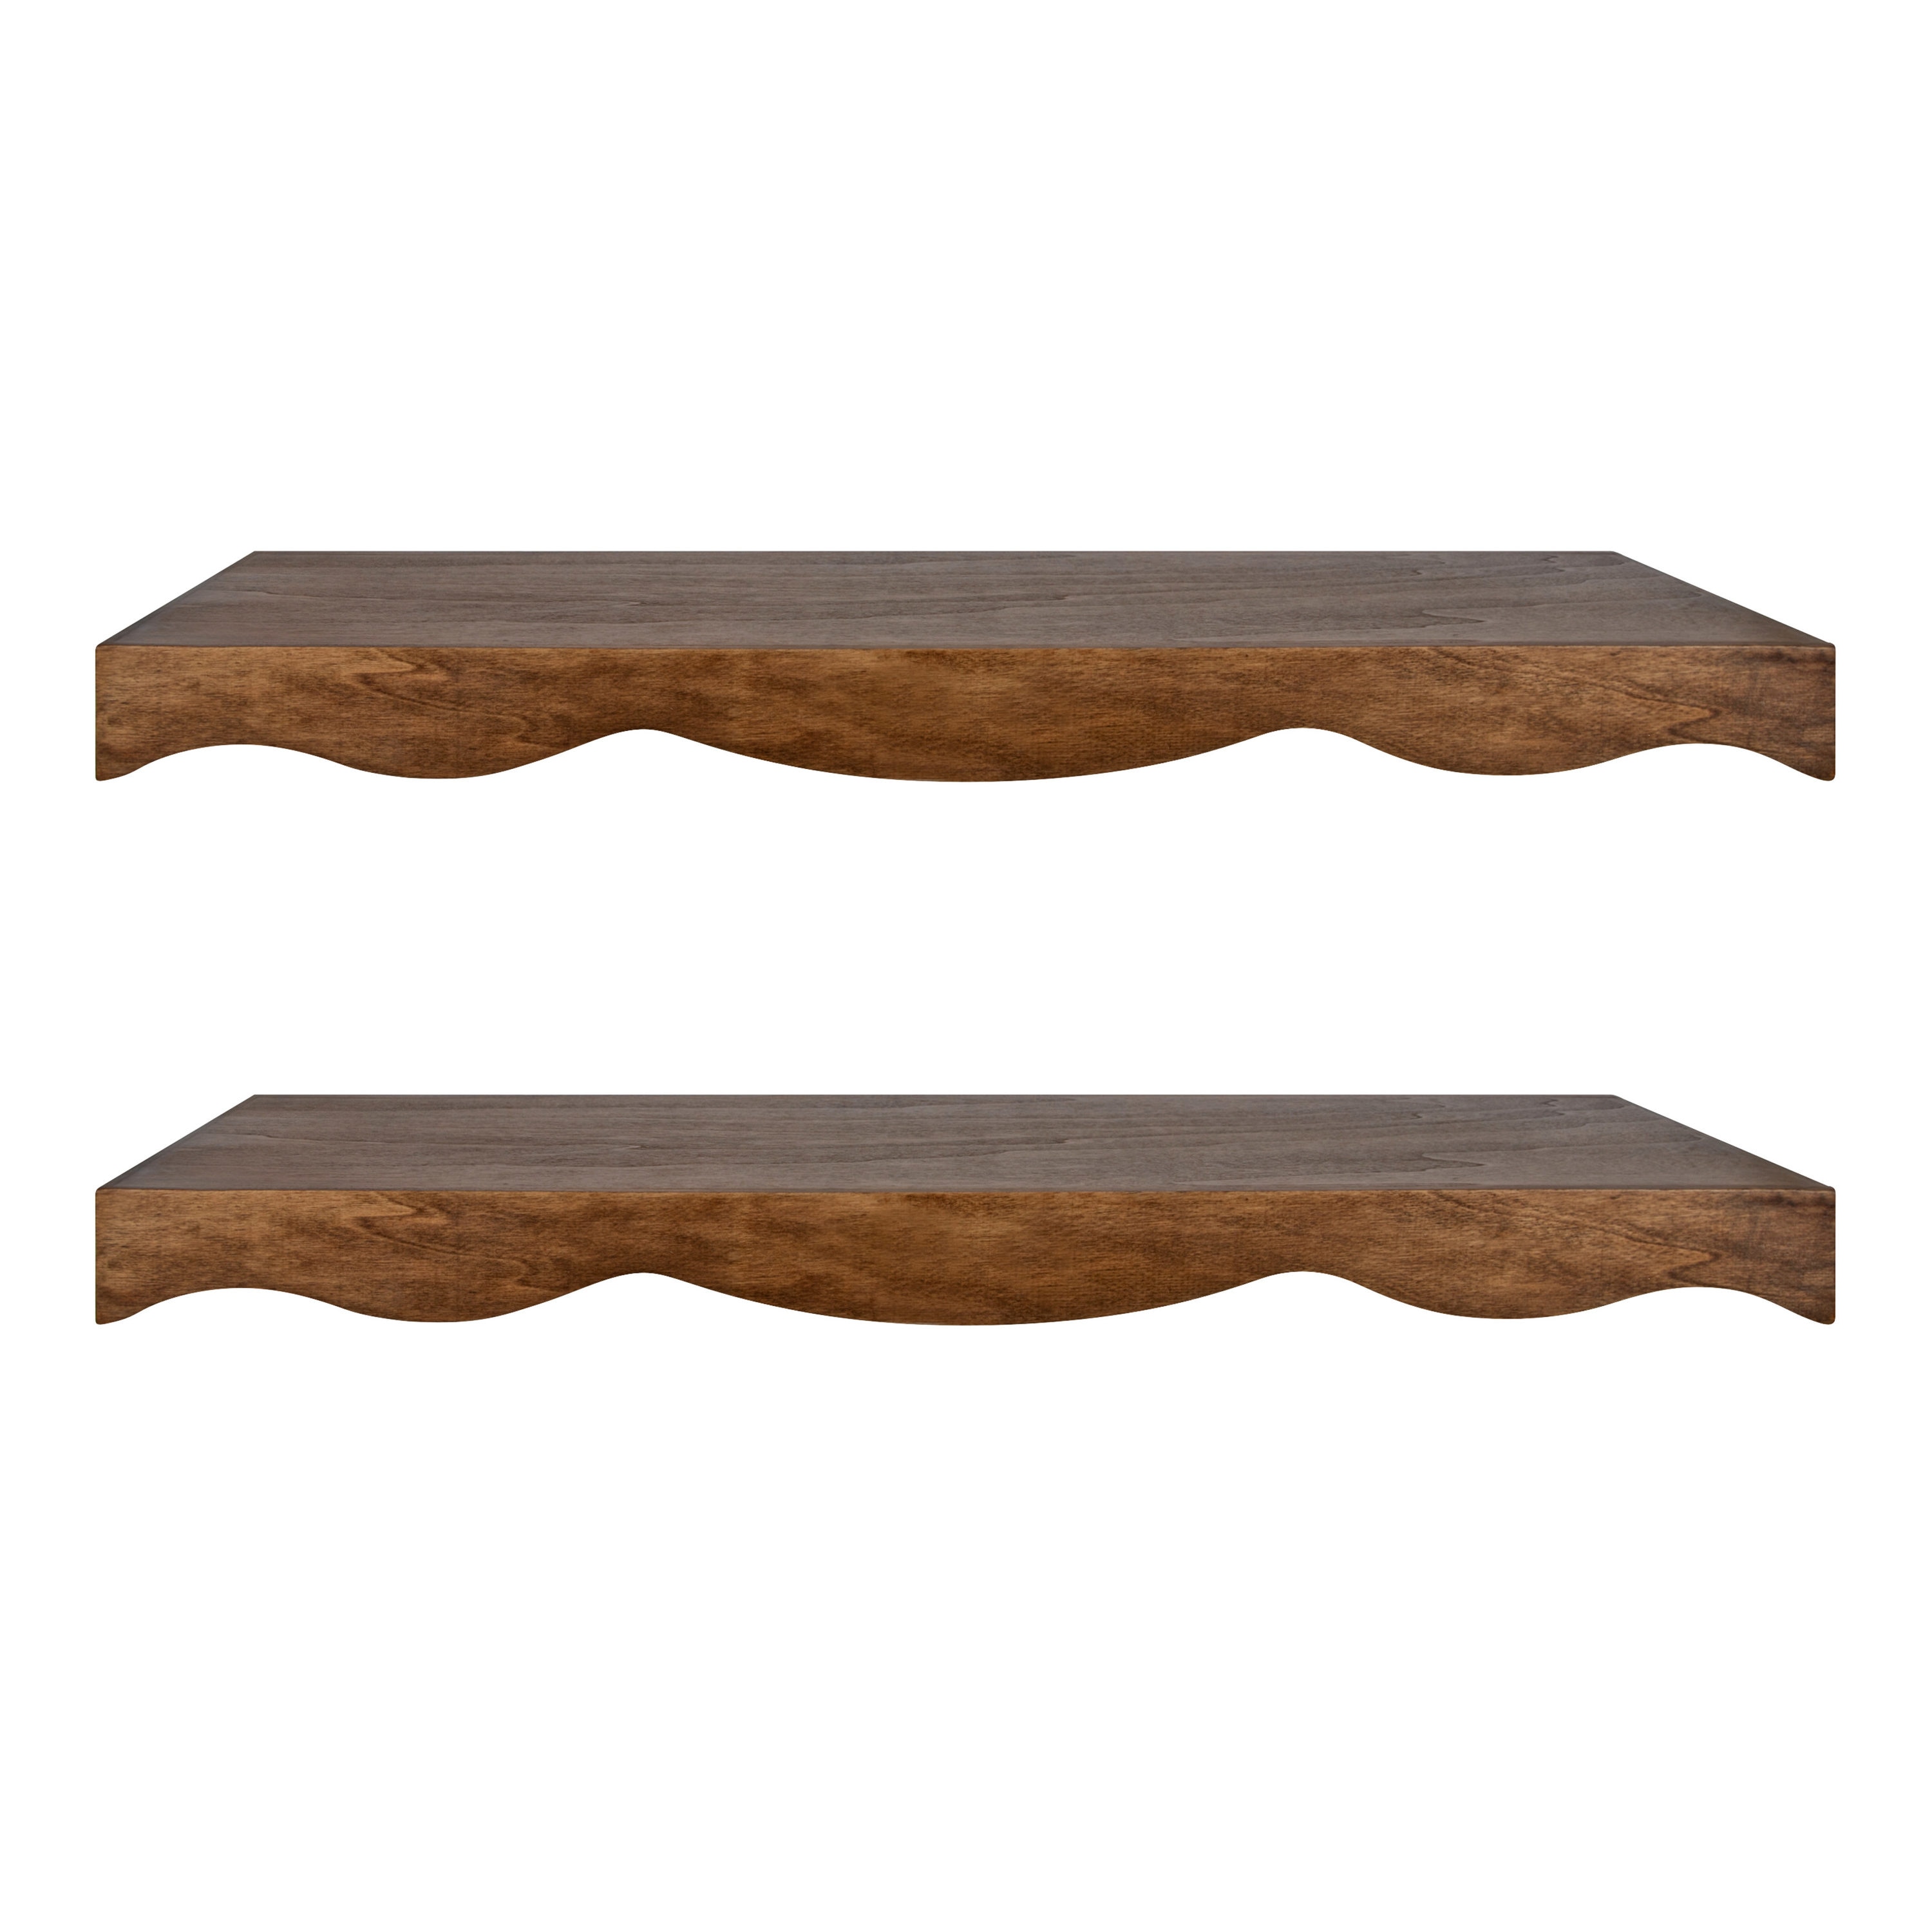 Split-Collar style Edge Shelving with brass trimmed walnut shelves